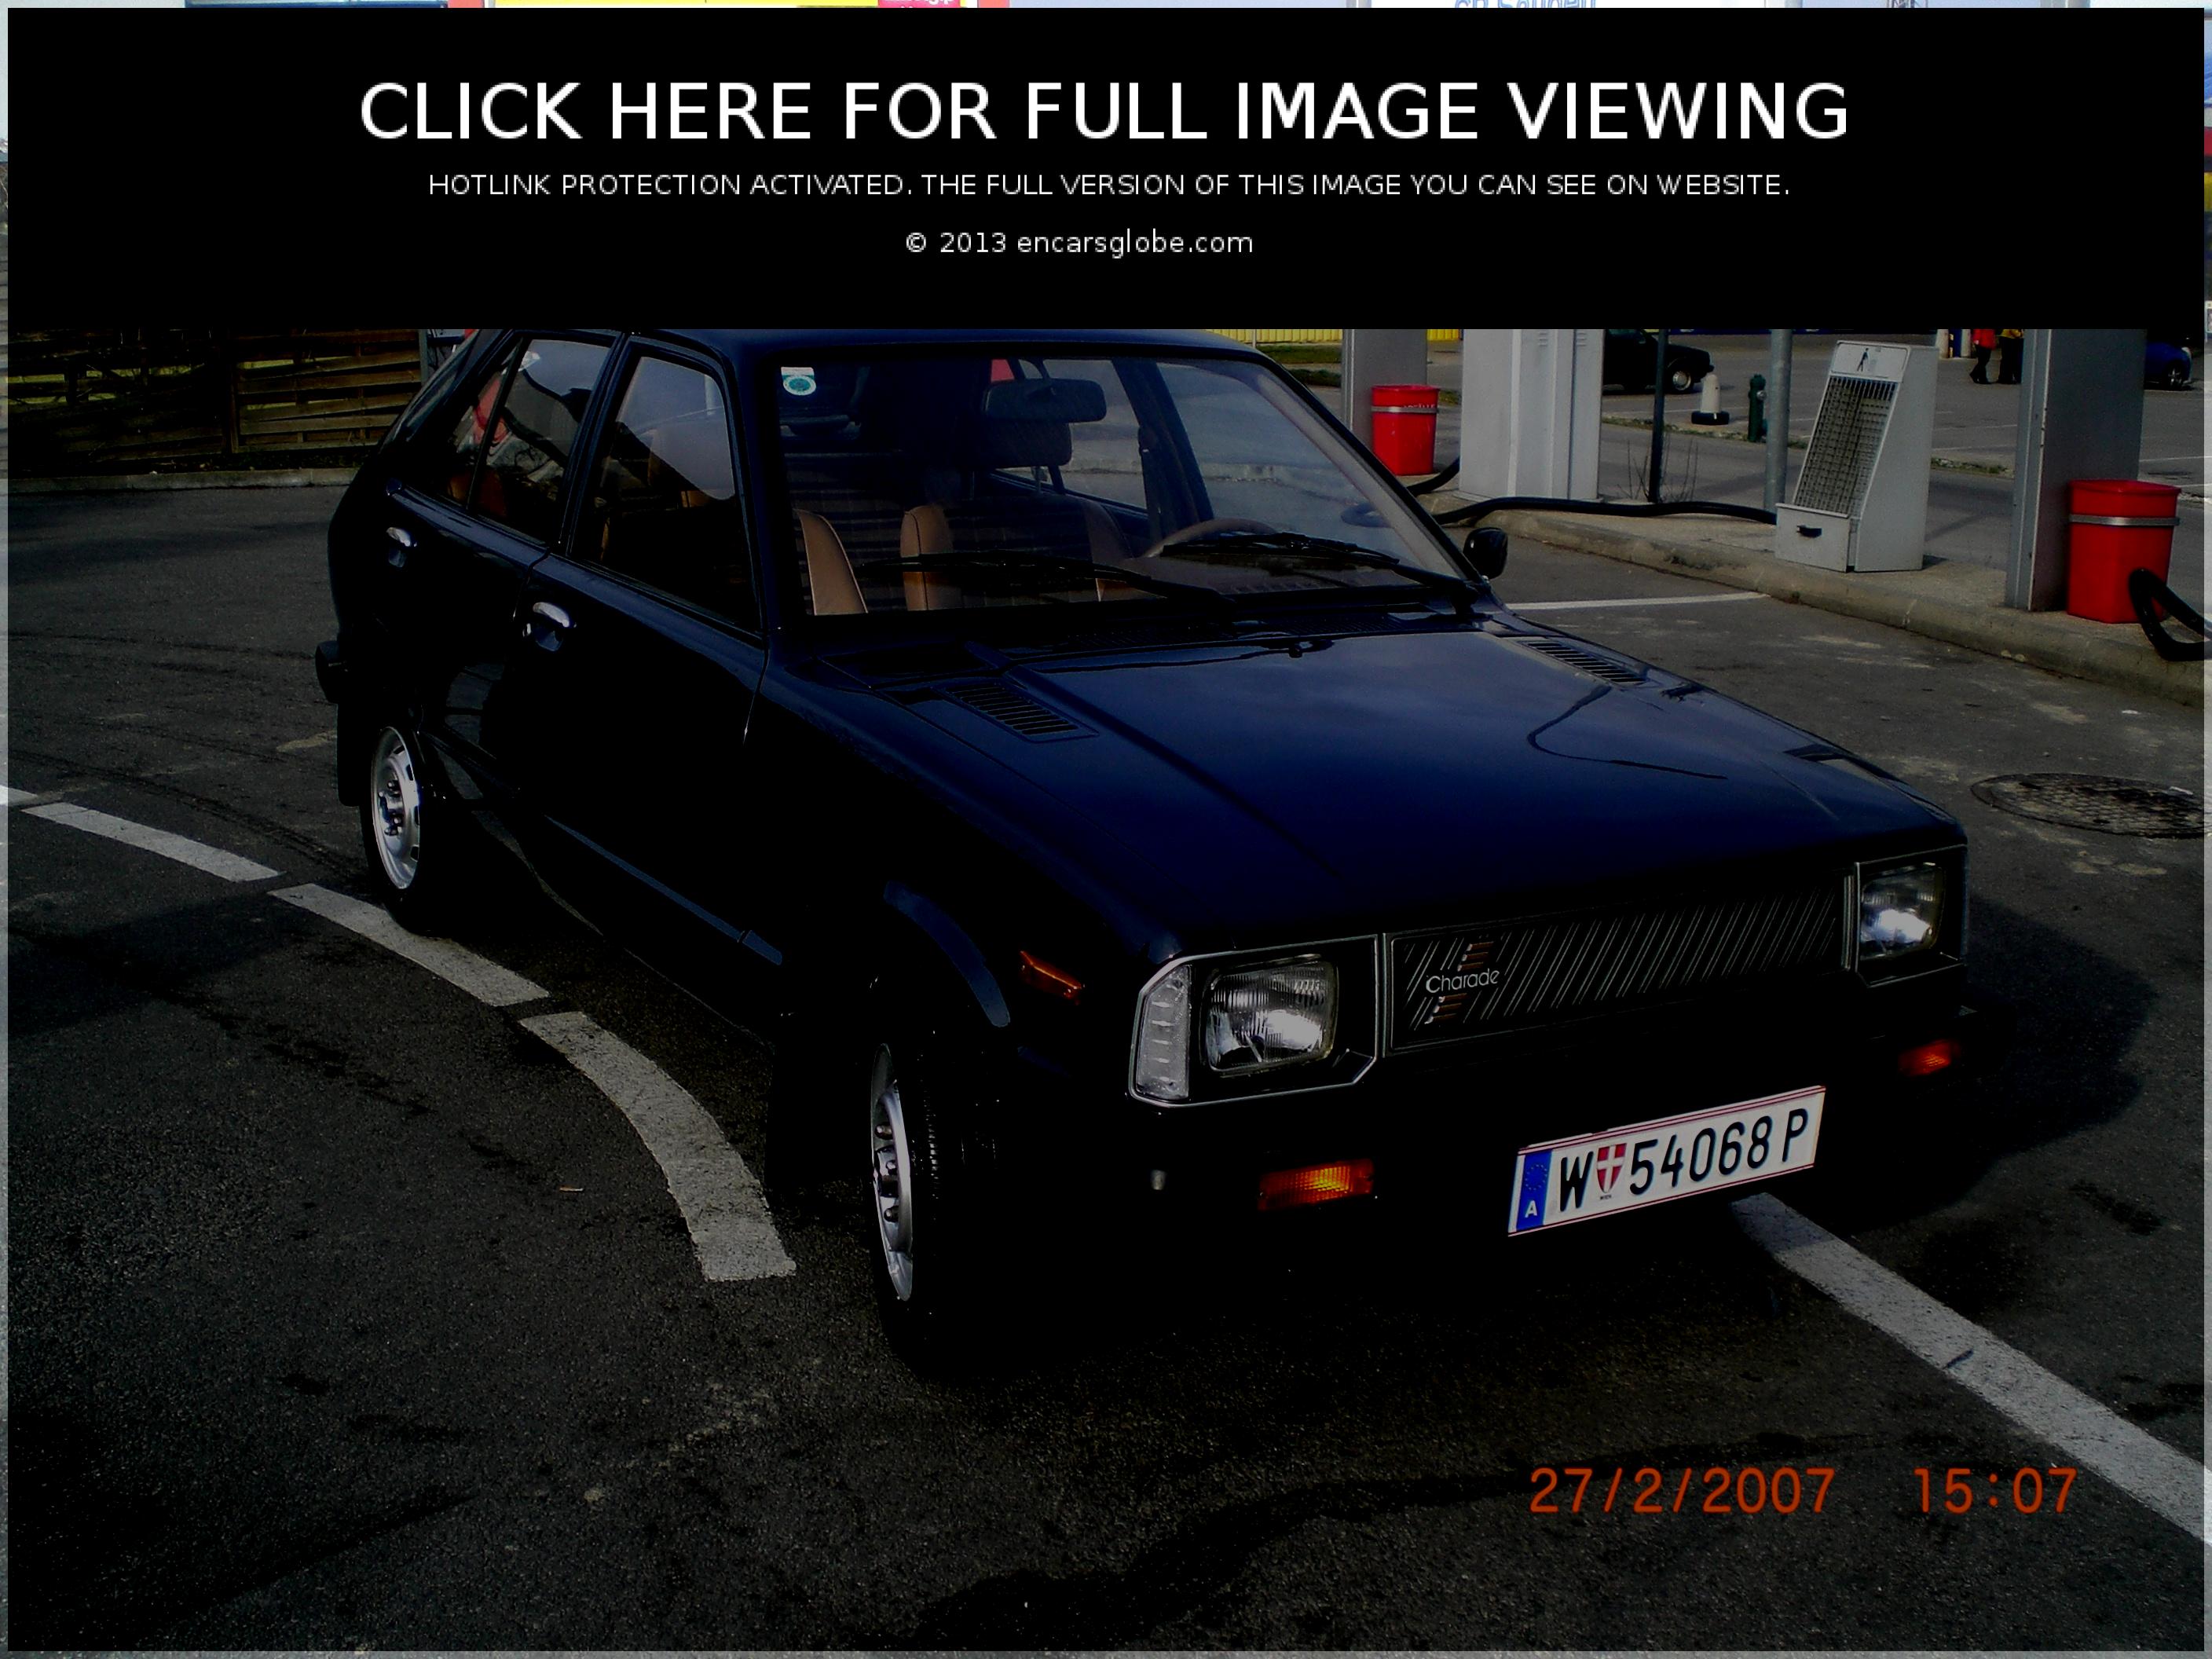 Galerie de photos du pick-up Daihatsu Compagno: Photo #08 sur 12, Image...